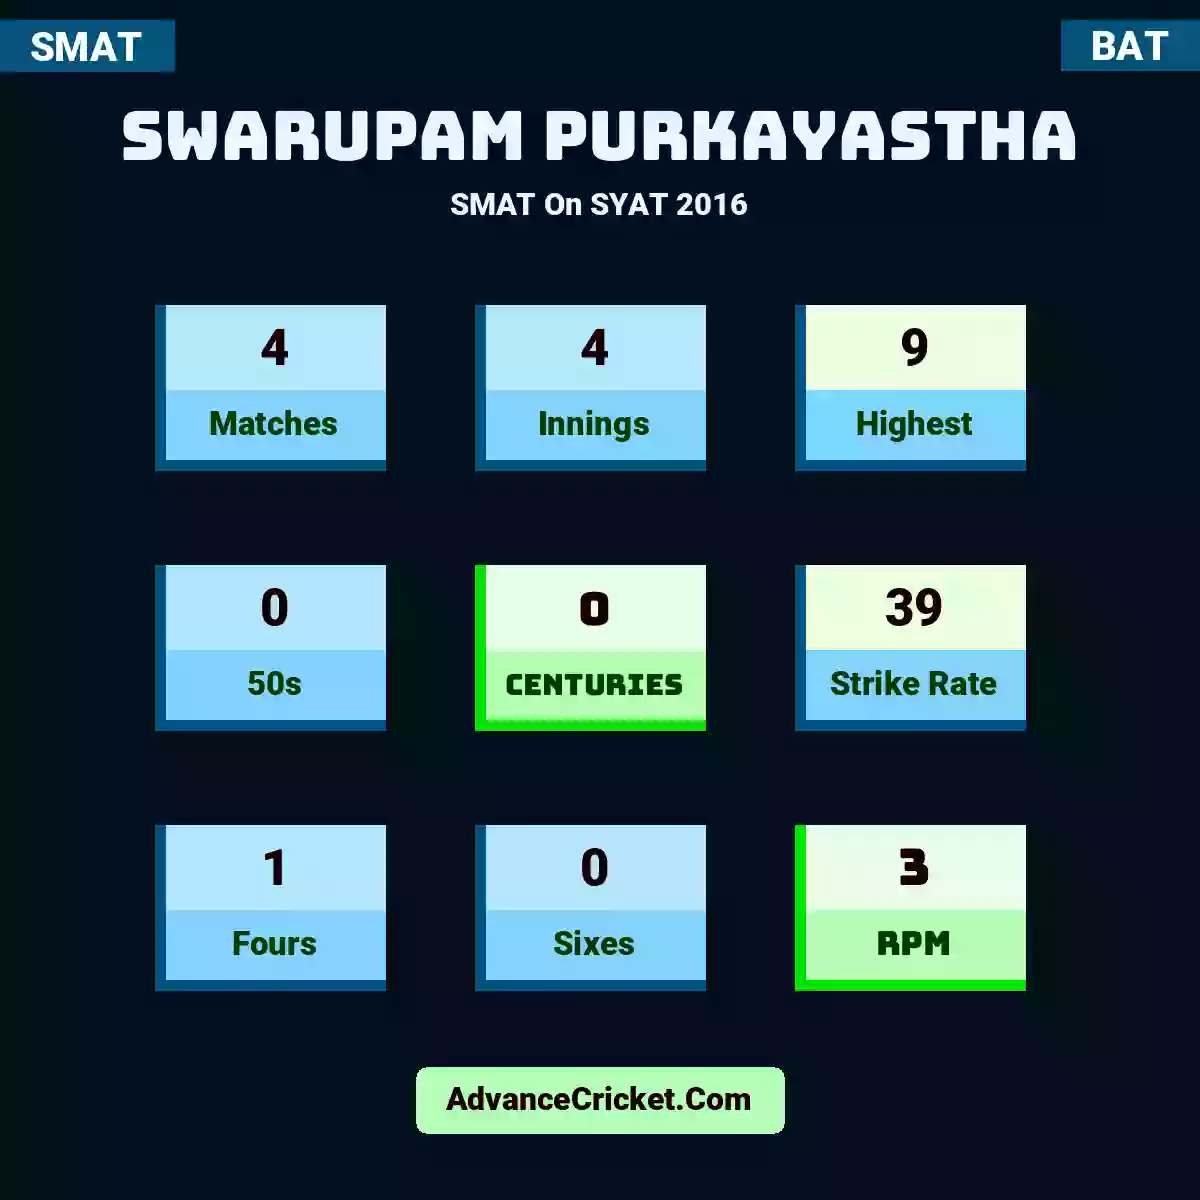 Swarupam Purkayastha SMAT  On SYAT 2016, Swarupam Purkayastha played 4 matches, scored 9 runs as highest, 0 half-centuries, and 0 centuries, with a strike rate of 39. S.Purkayastha hit 1 fours and 0 sixes, with an RPM of 3.